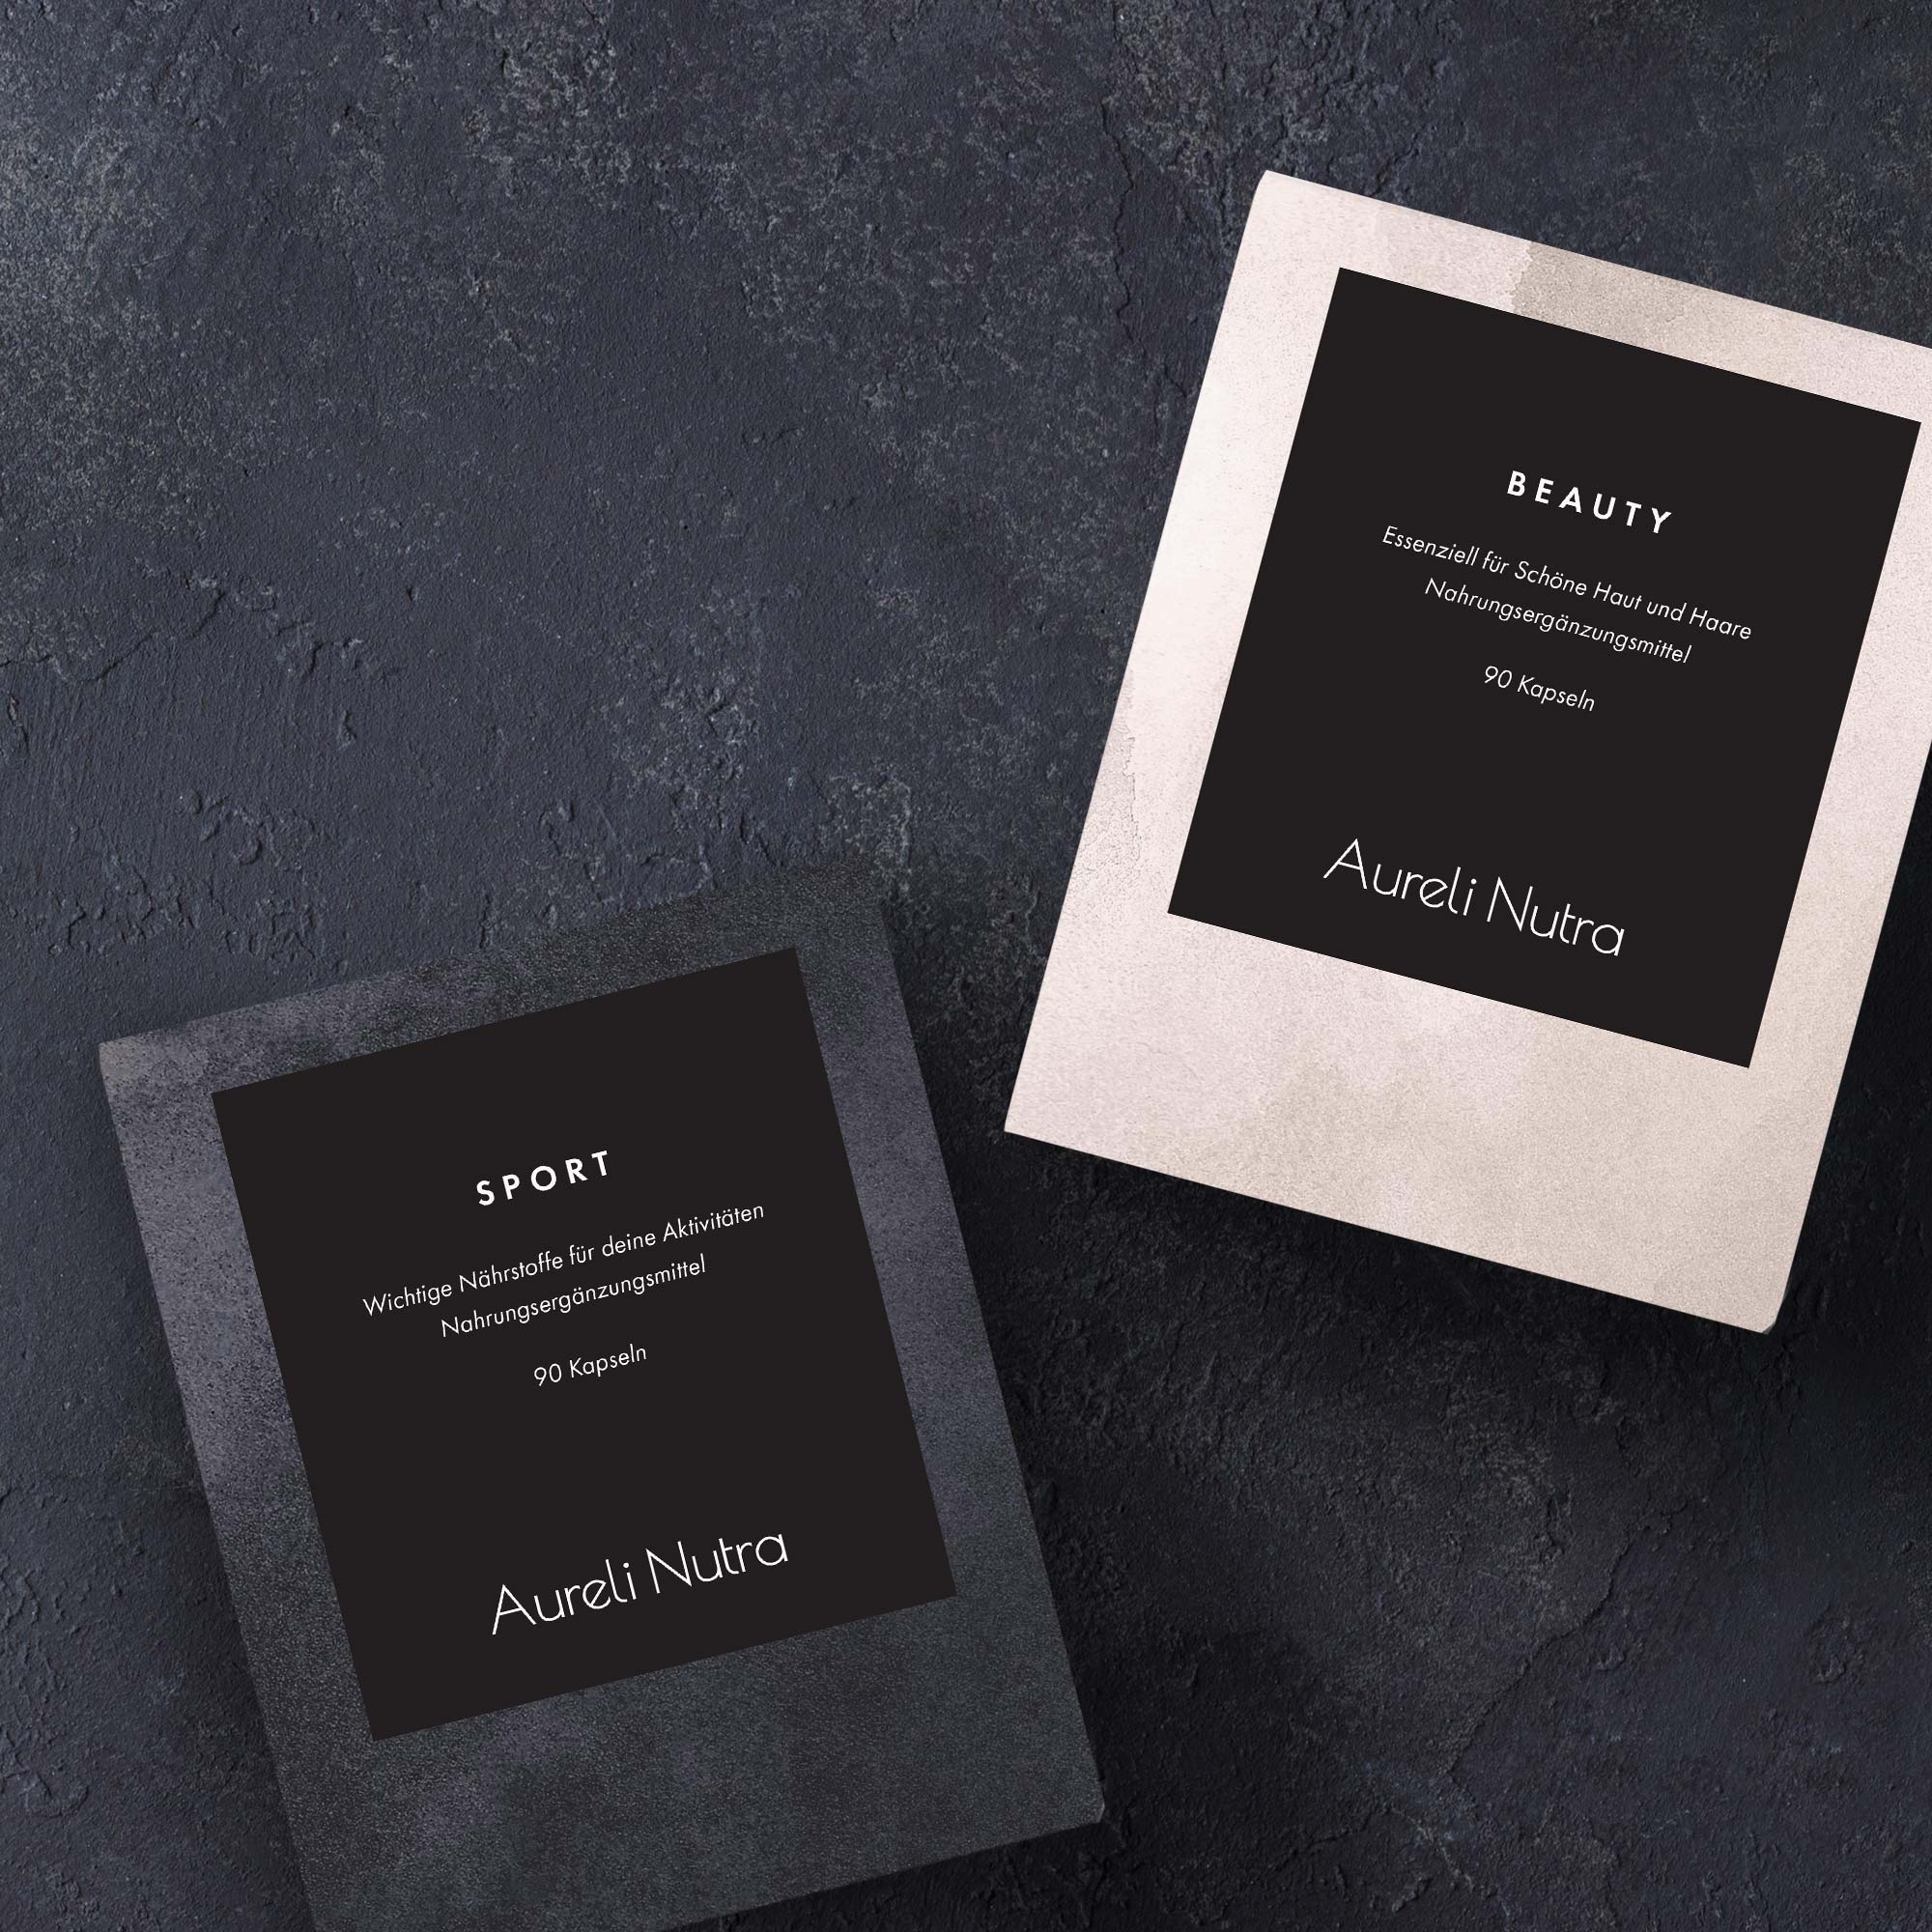 karolina krol studio aureli nutra natural health beauty supplements elegant minimalist modern illustrated packaging design